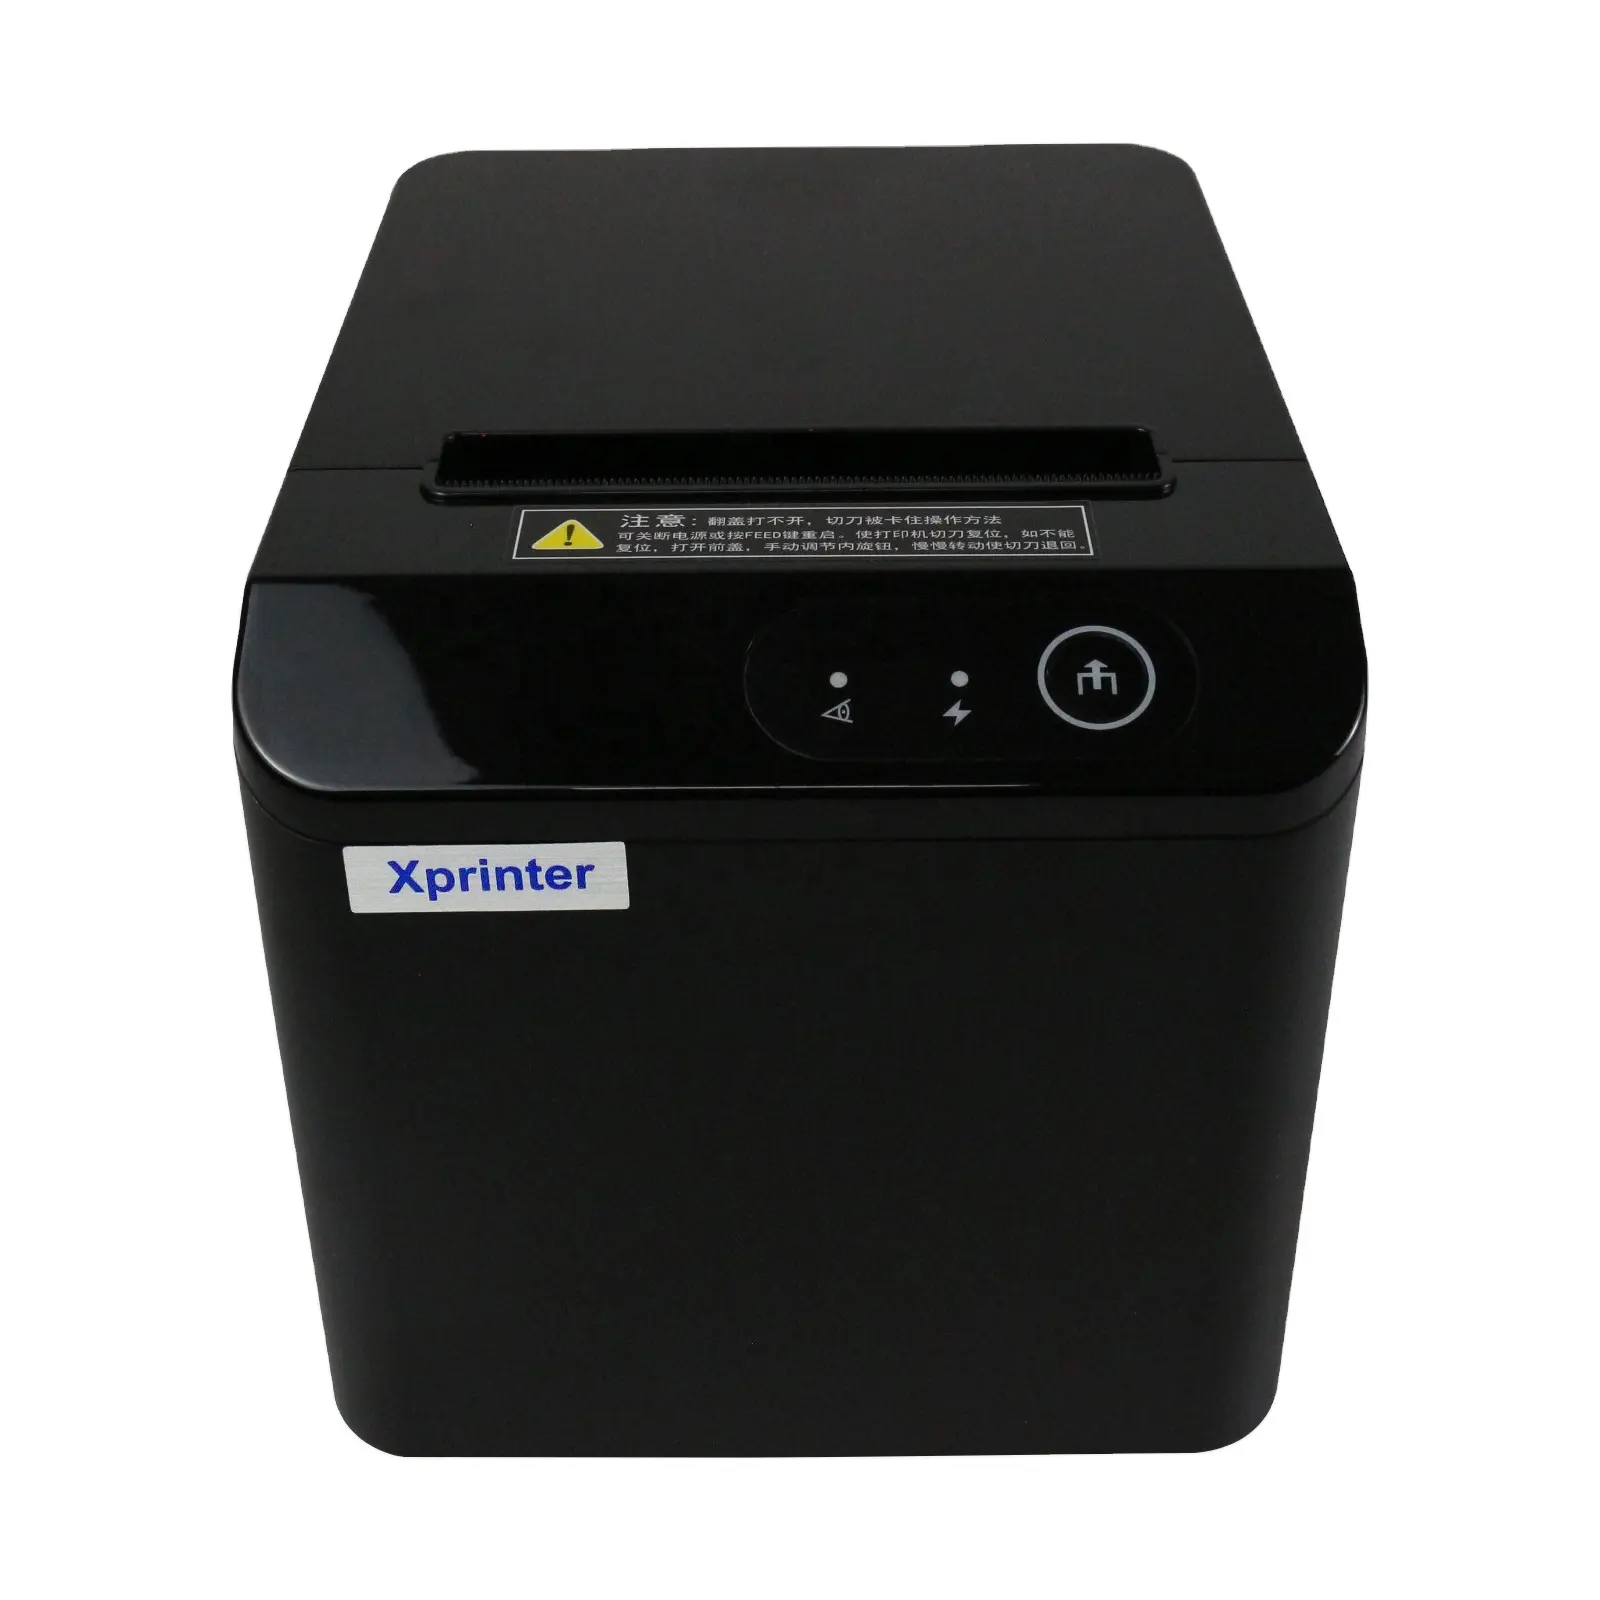 Xprinter T80Q USB LAN Receipt printer 80mm with auto cutter POS printer for Restaurant printer Supplier factory direct offer